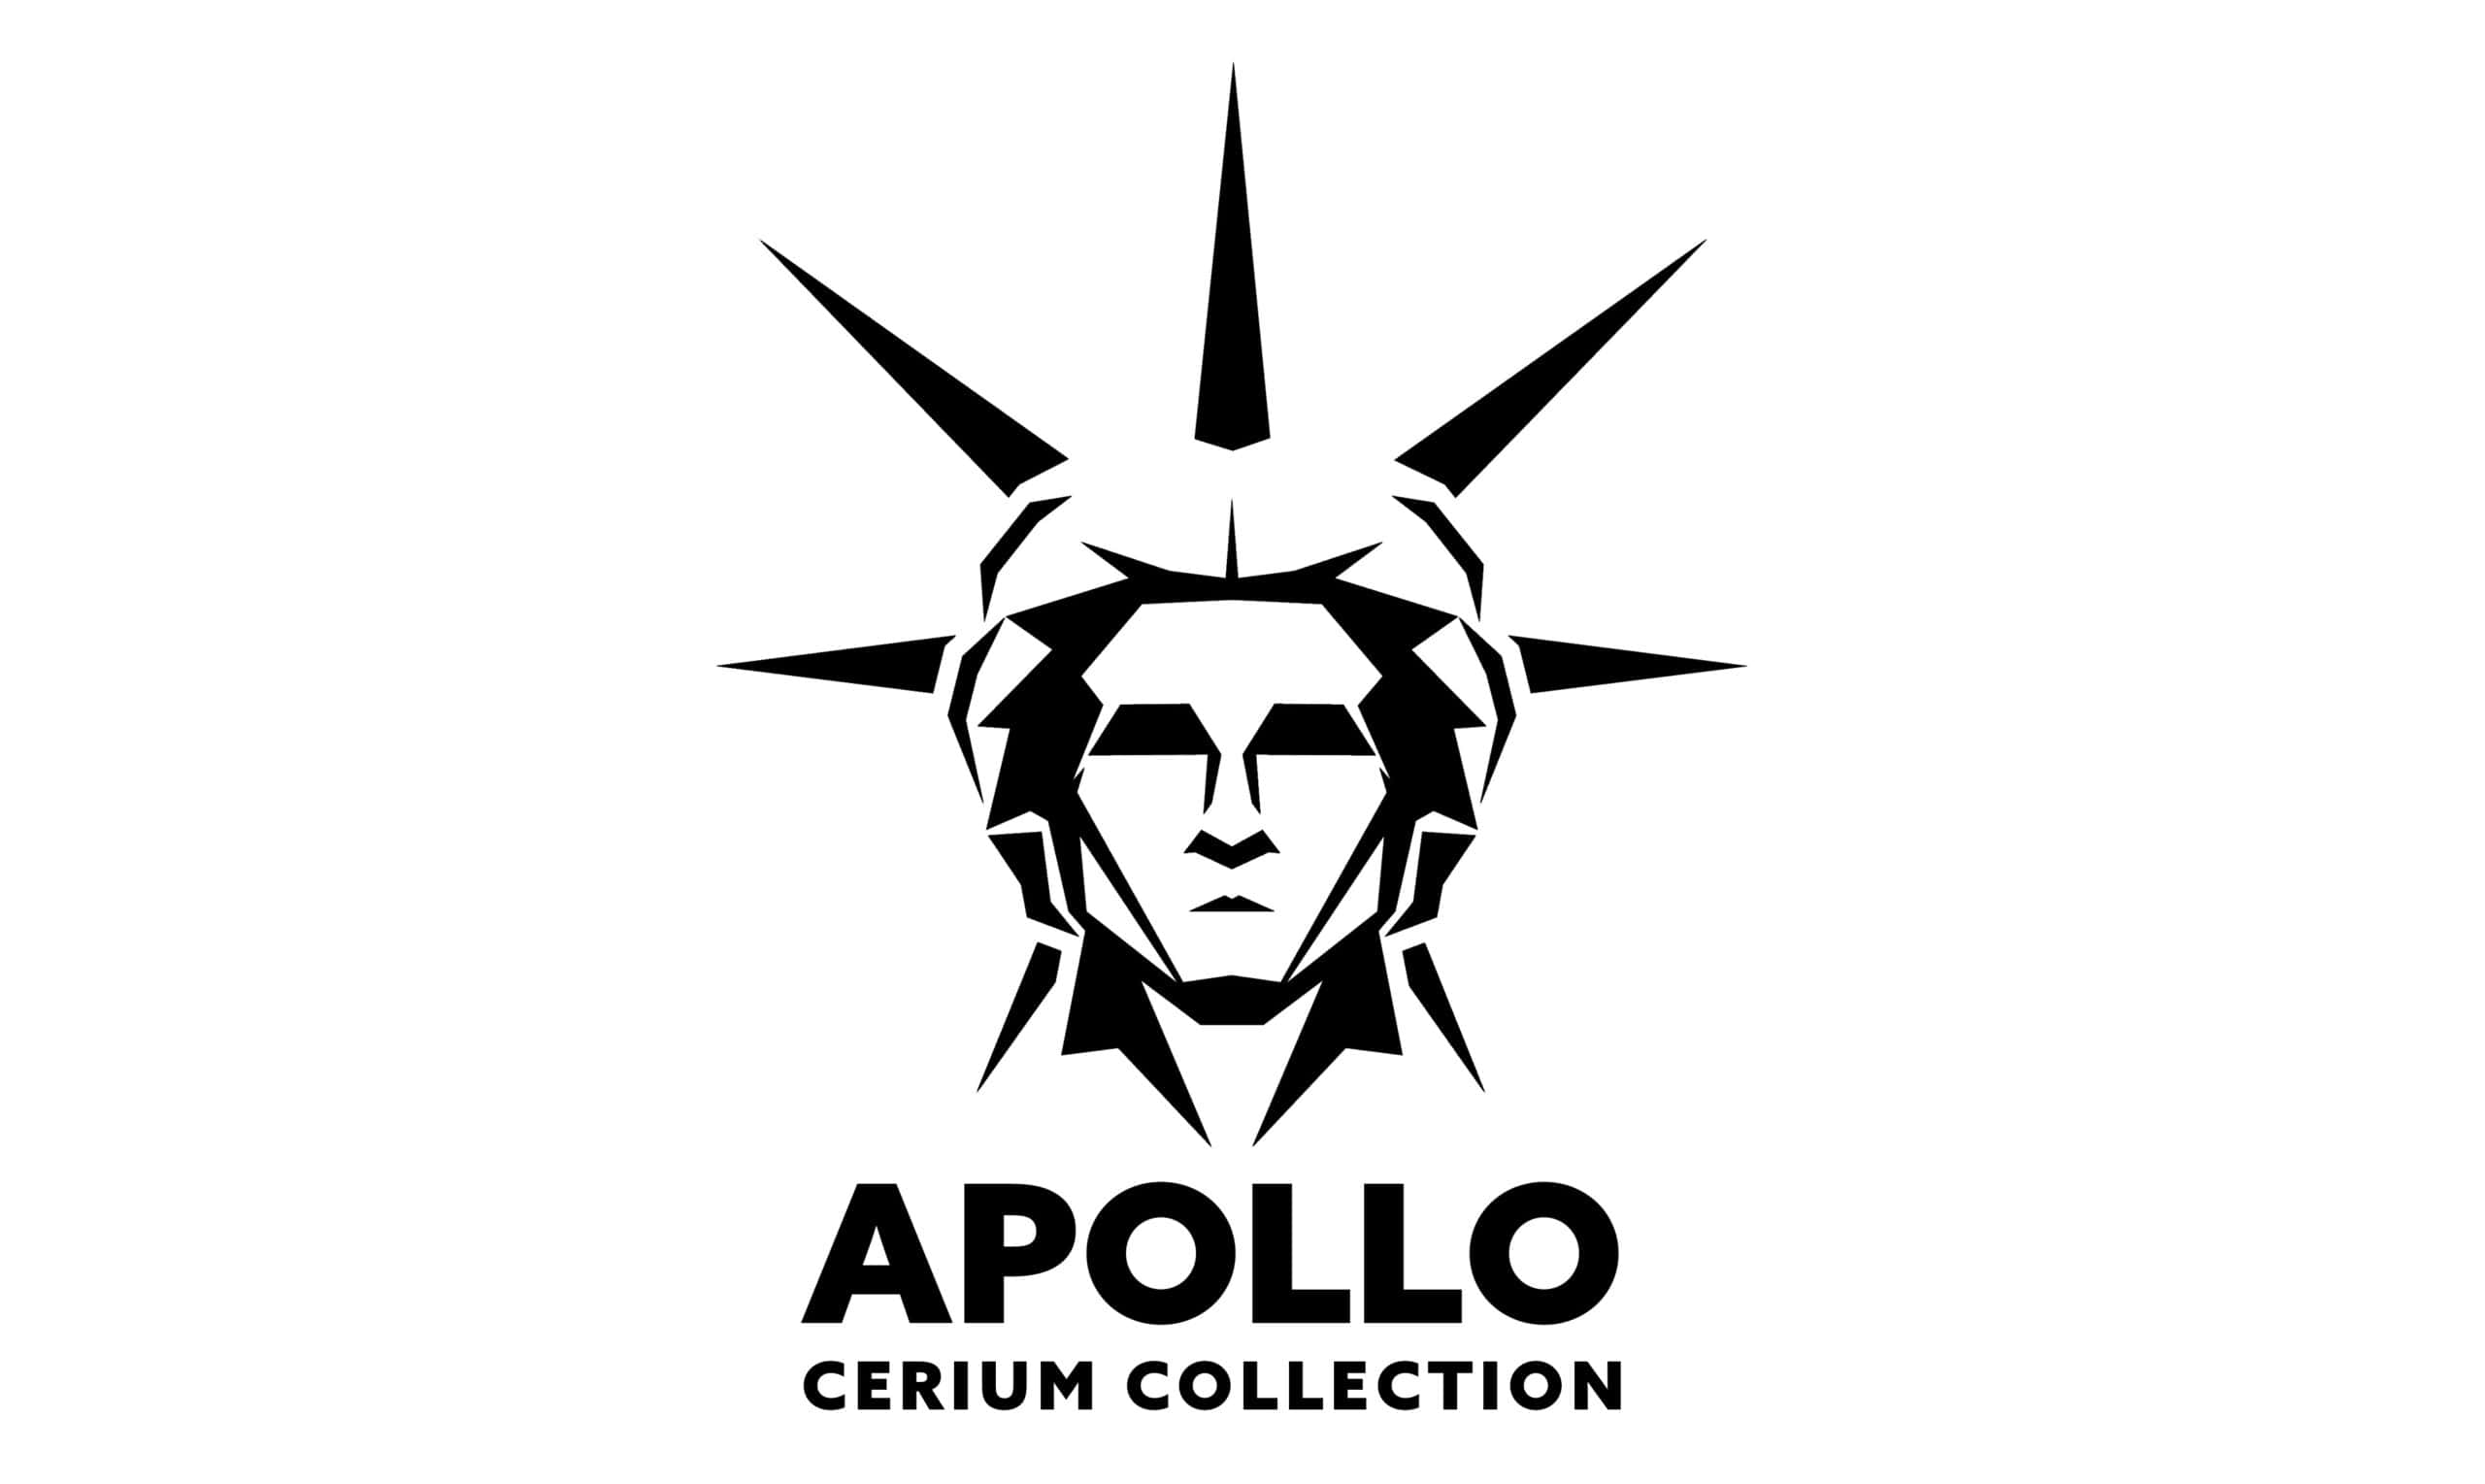 Apollo - Cerium Collection